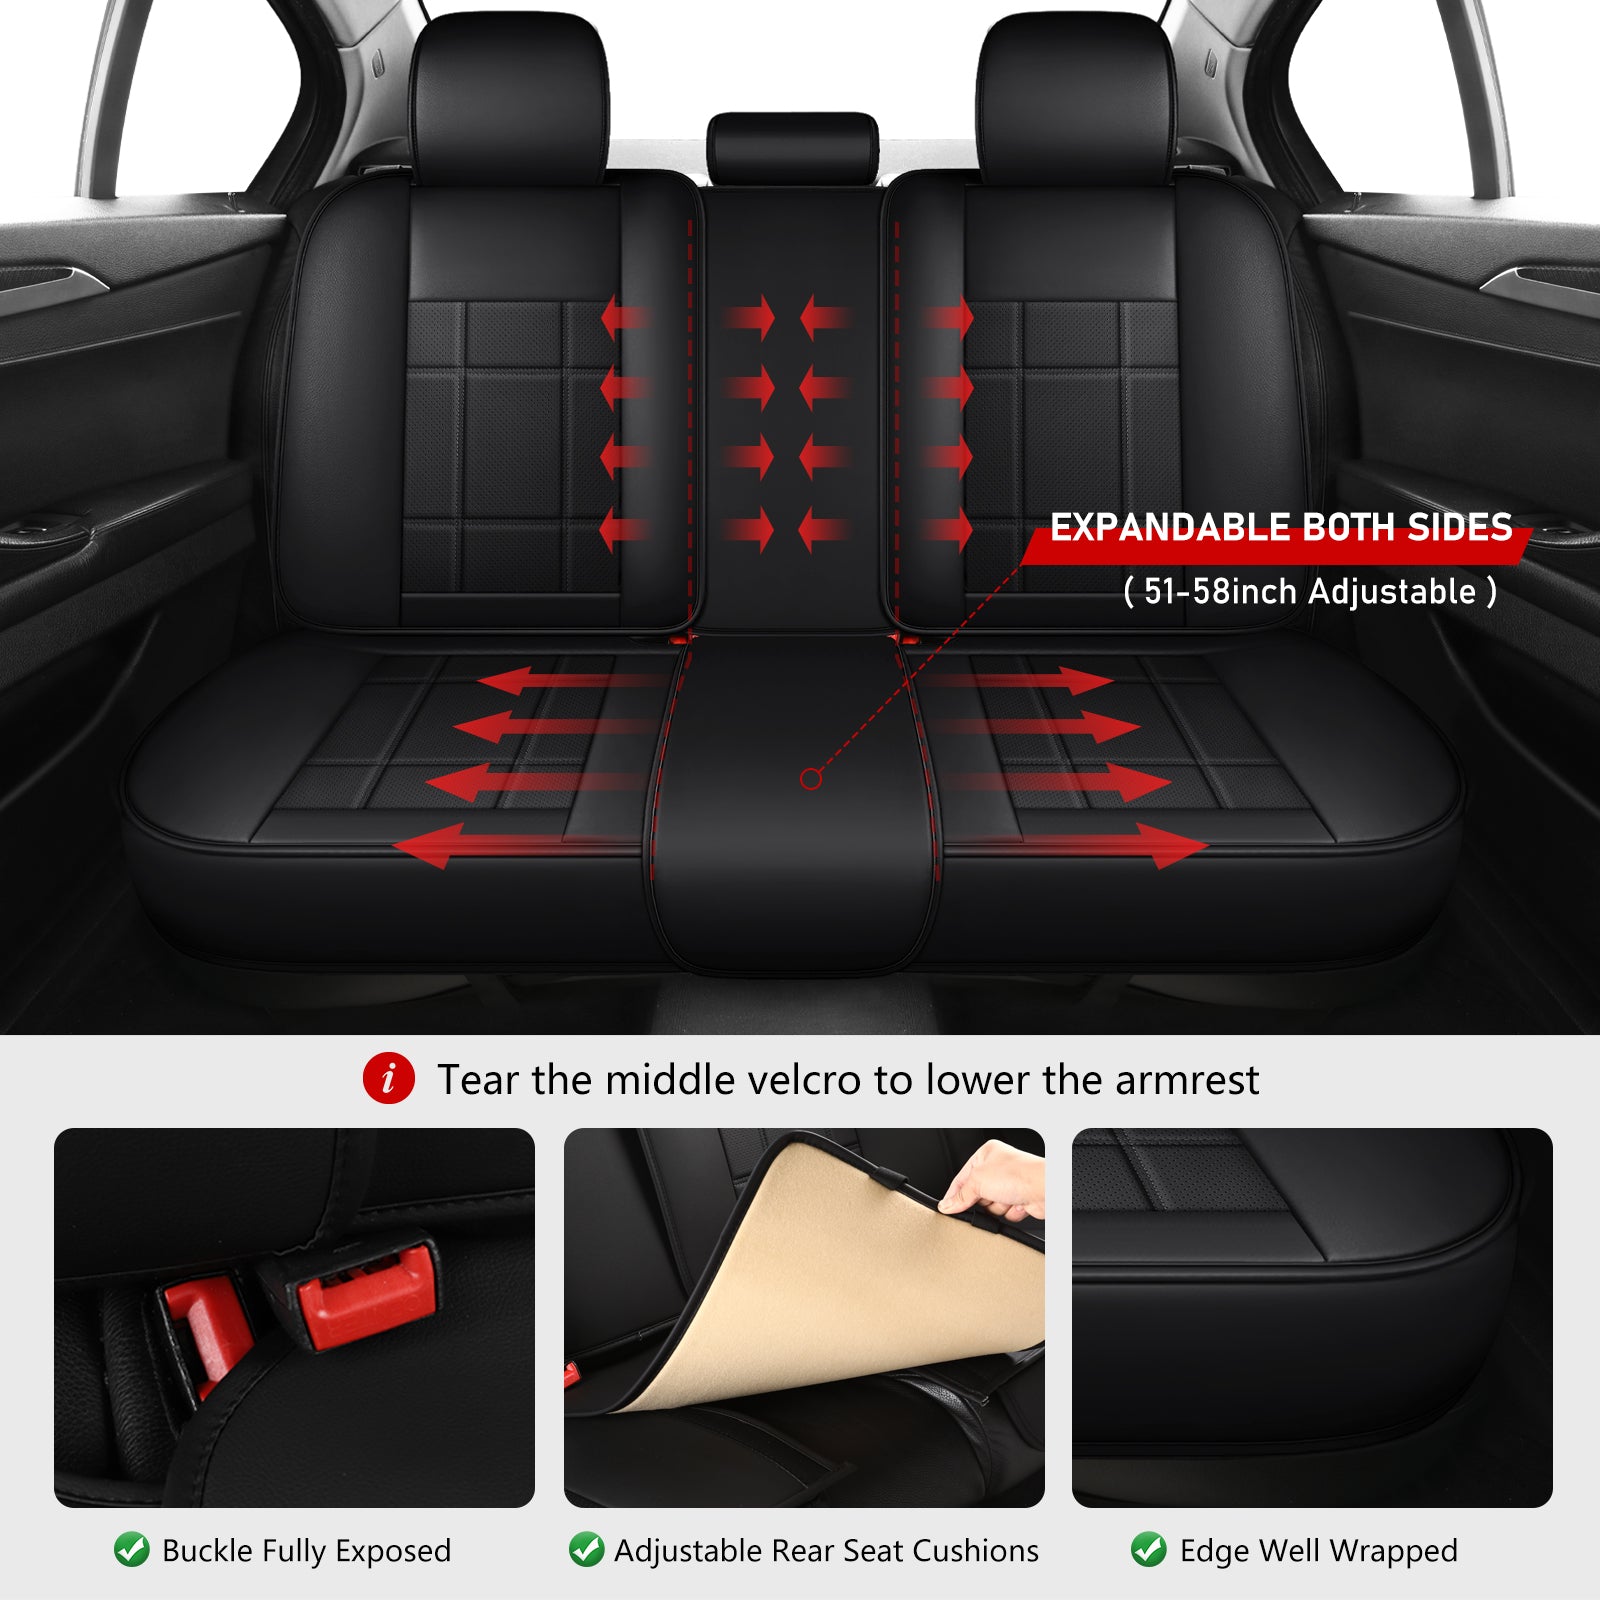 Kivaguru Leatherette Car Seat Covers, Non-Slip and Waterproof